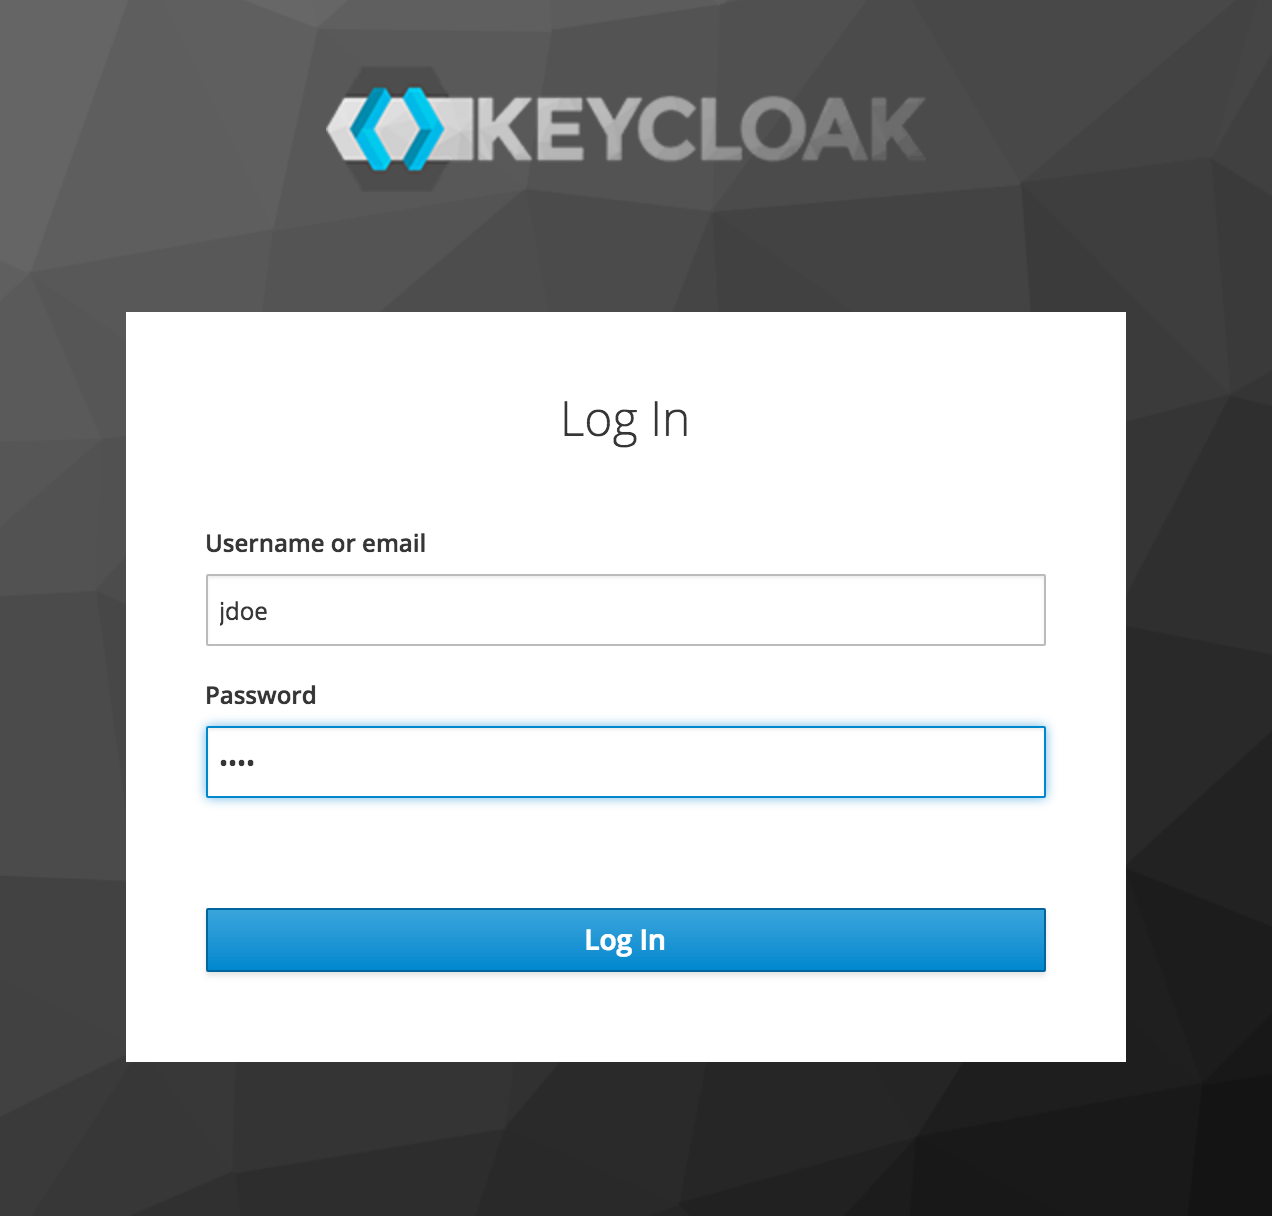 Log in to Keycloak